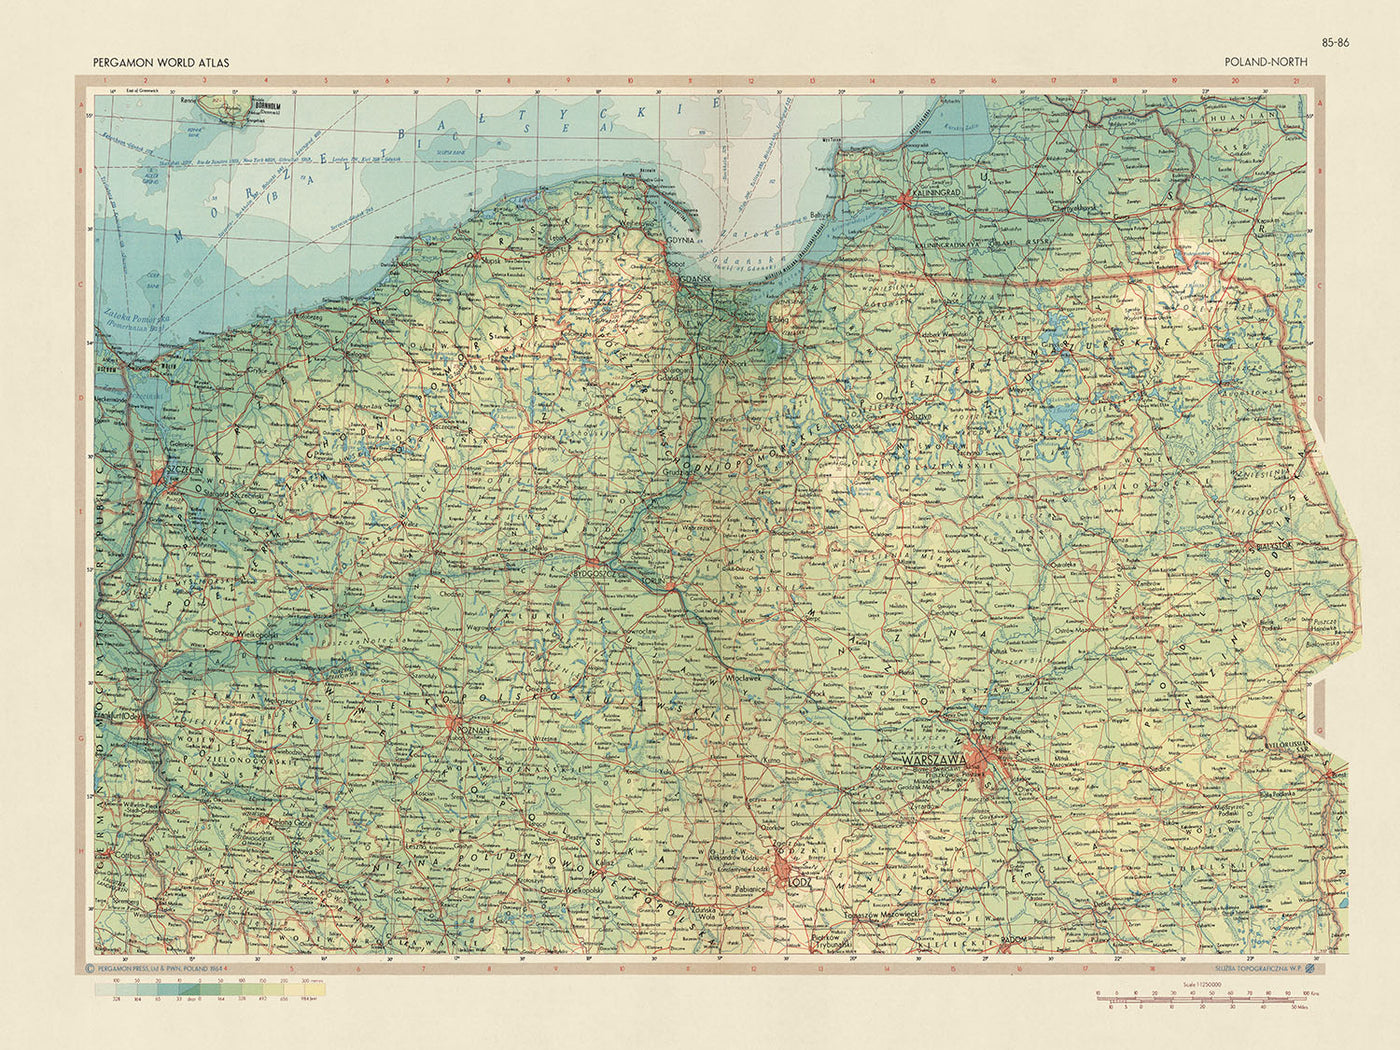 Old Map of Poland, 1967: Gdansk, Warsaw, Bialystok, Kaliningrad, Vistula River